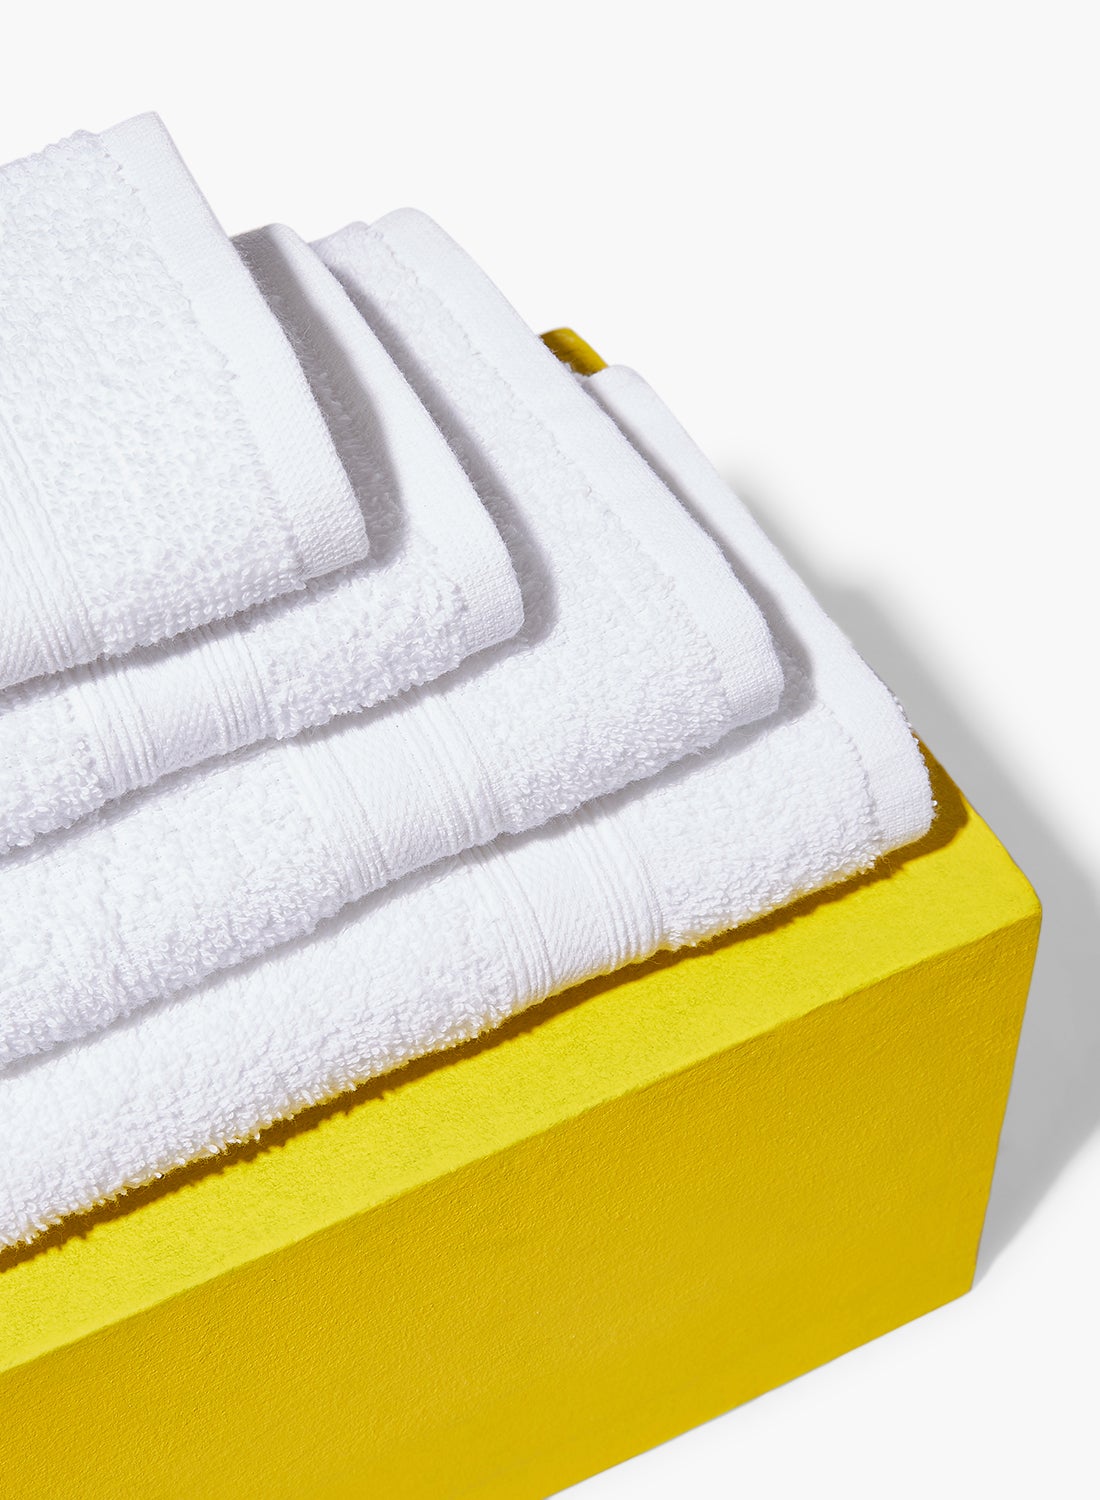 20 Piece Bathroom Towel Set - 400 GSM 100% Cotton Terry - 10 Hand Towel - 10 Face Towel - White Color -Quick Dry - Super Absorbent 